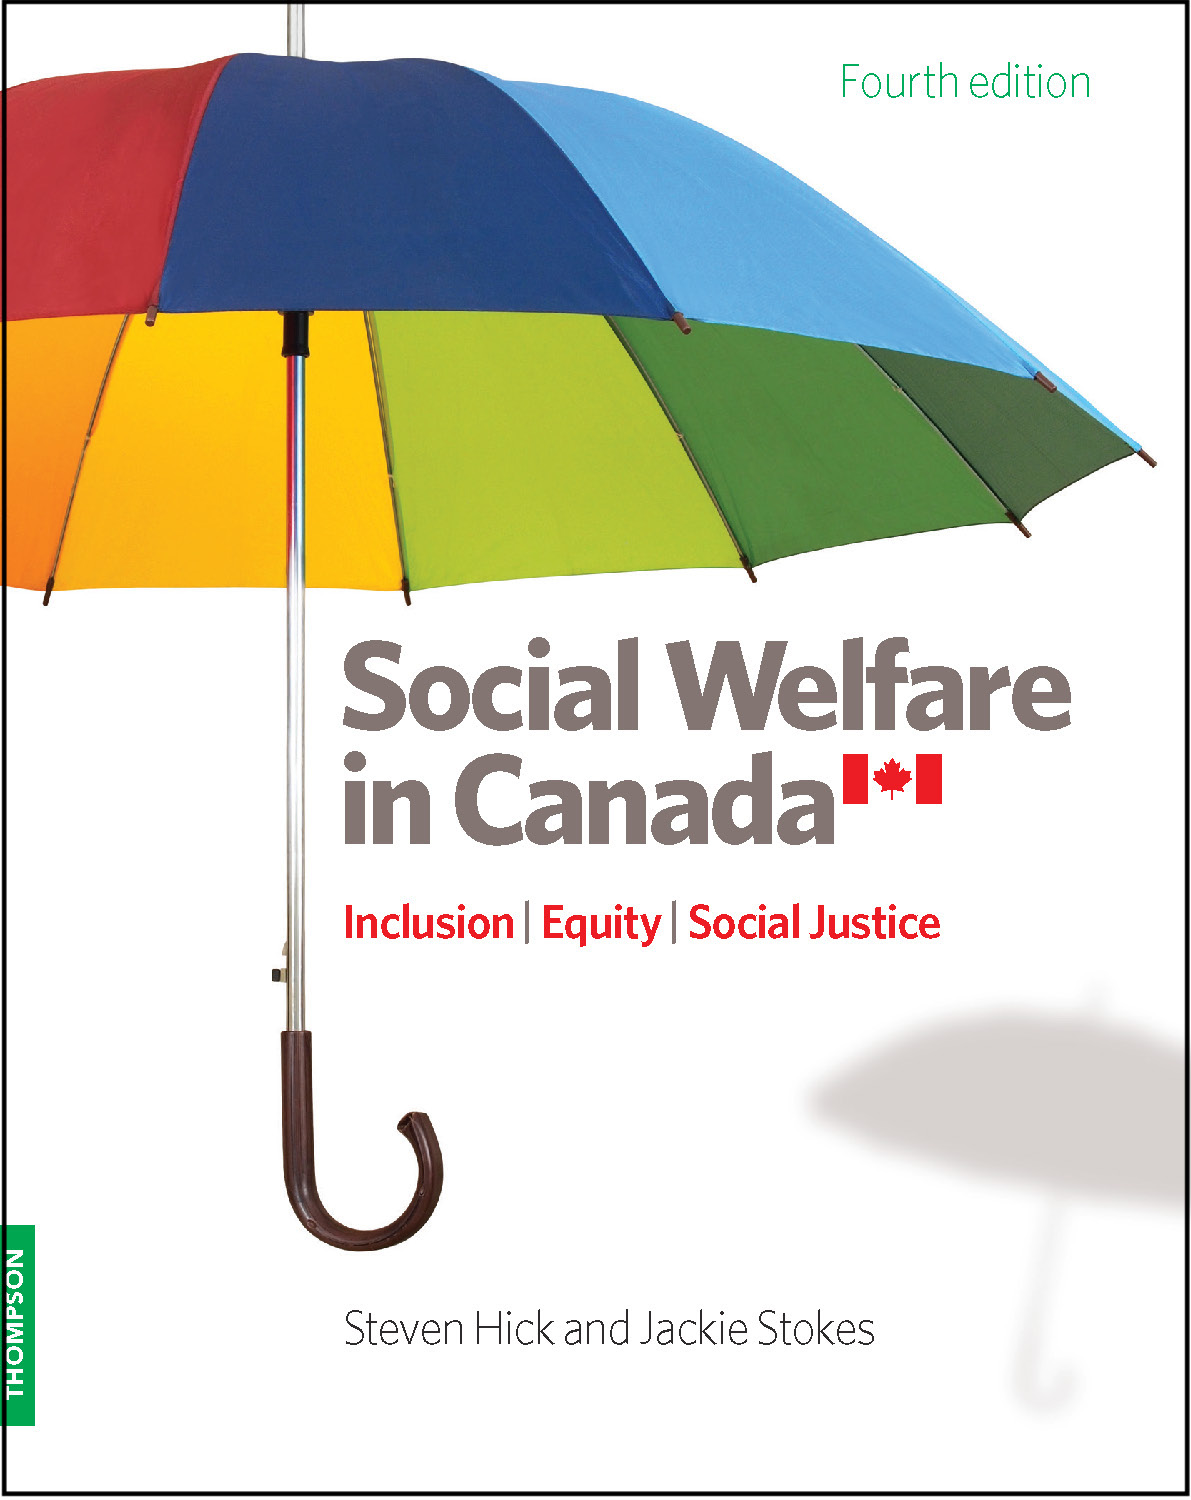 Understanding Income Security Social Welfare in Canada